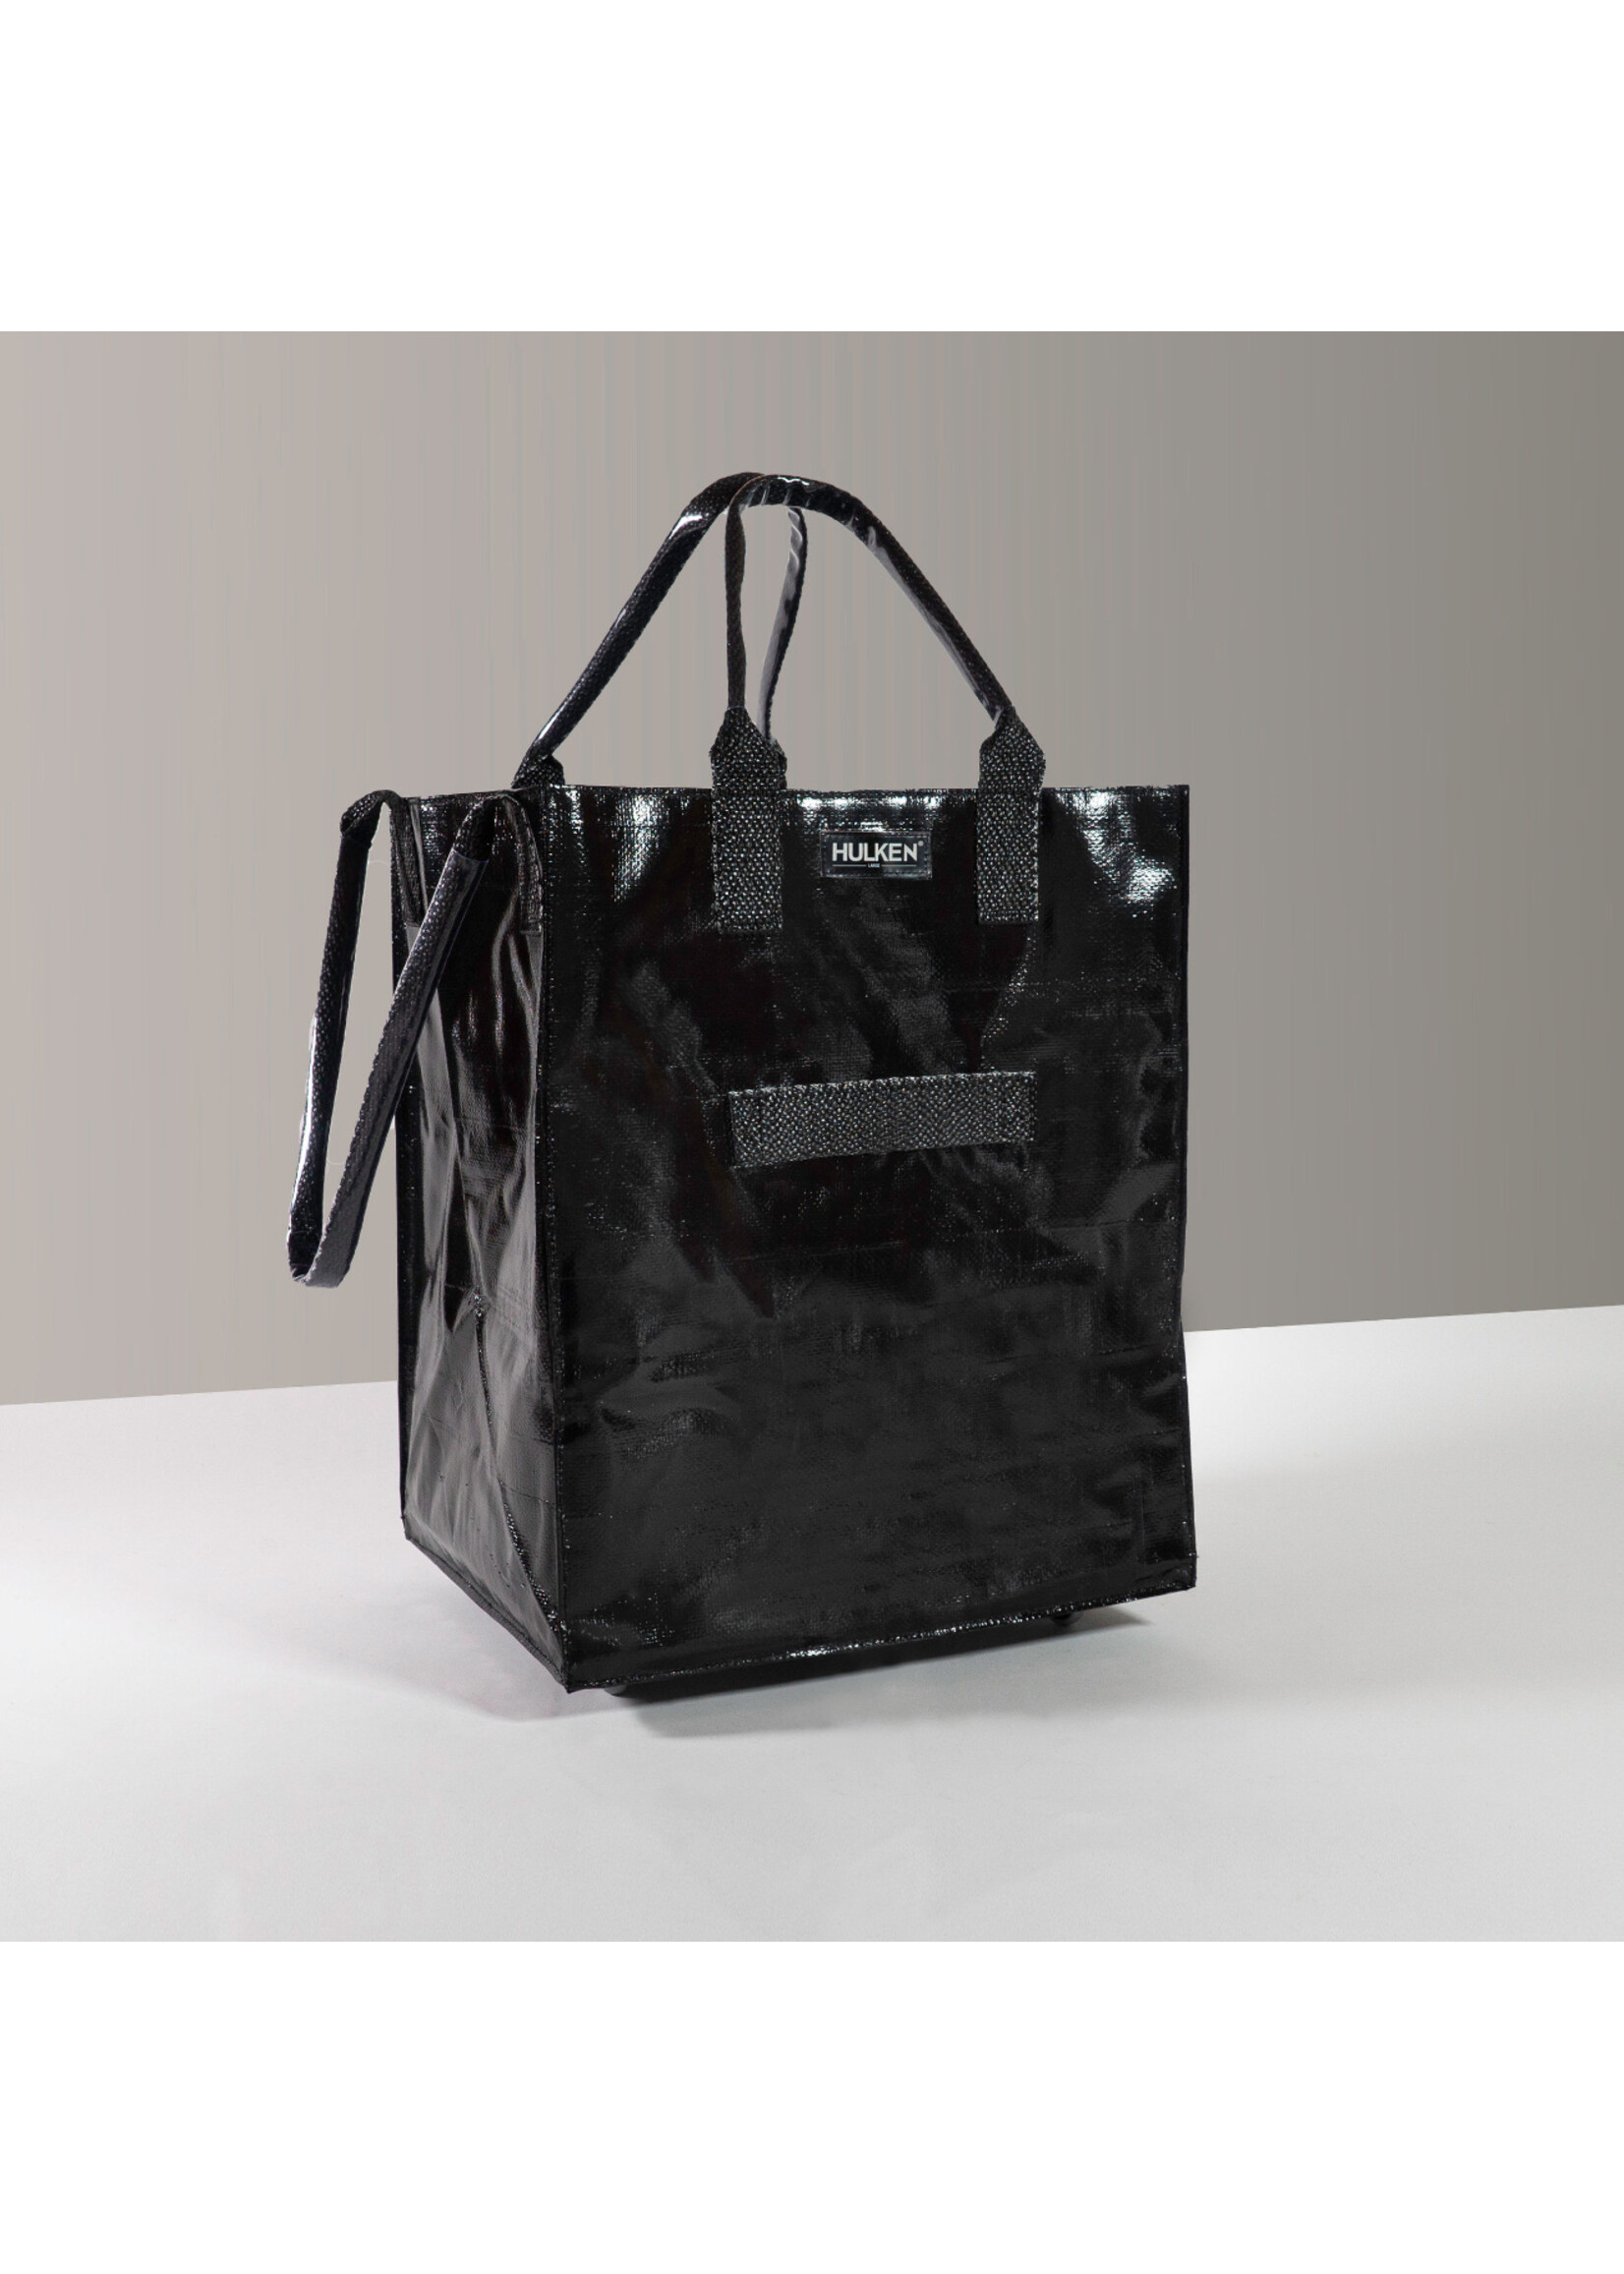 Hulkenbag Hulken Bag Large Black (40x50x60) WITH BUILT-IN COVER